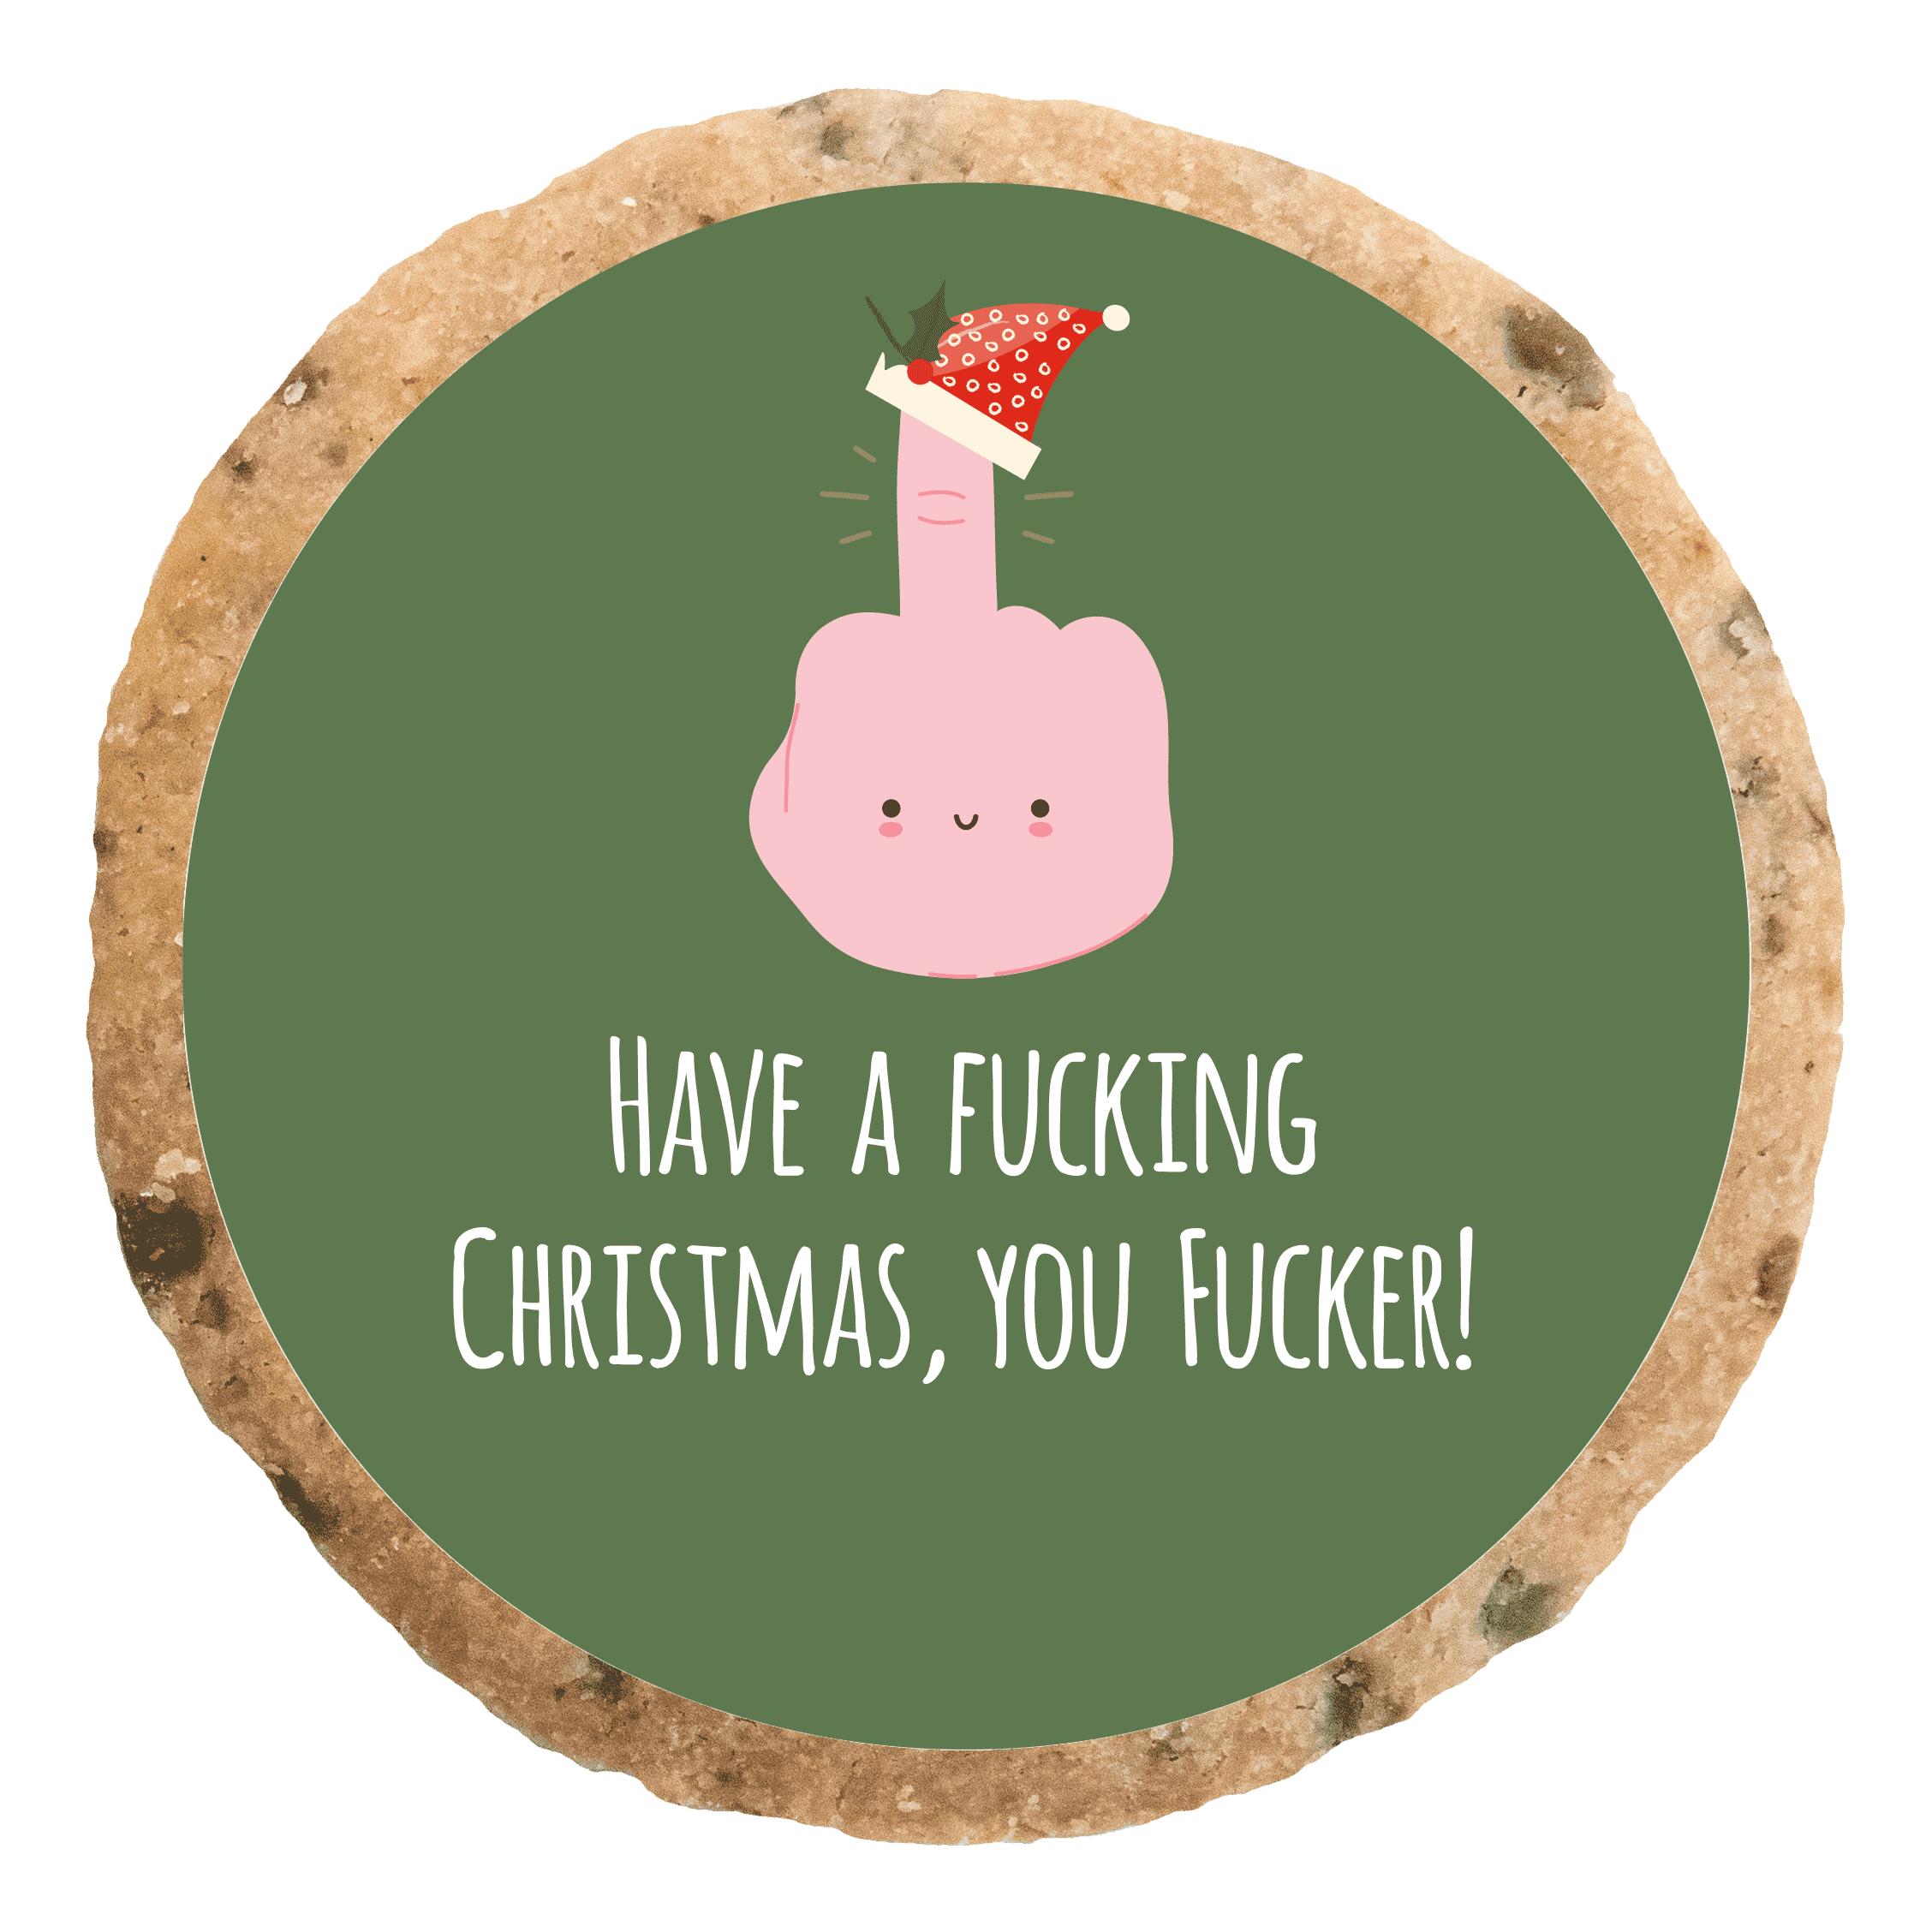 "Have a fucking Christmas" MotivKEKS